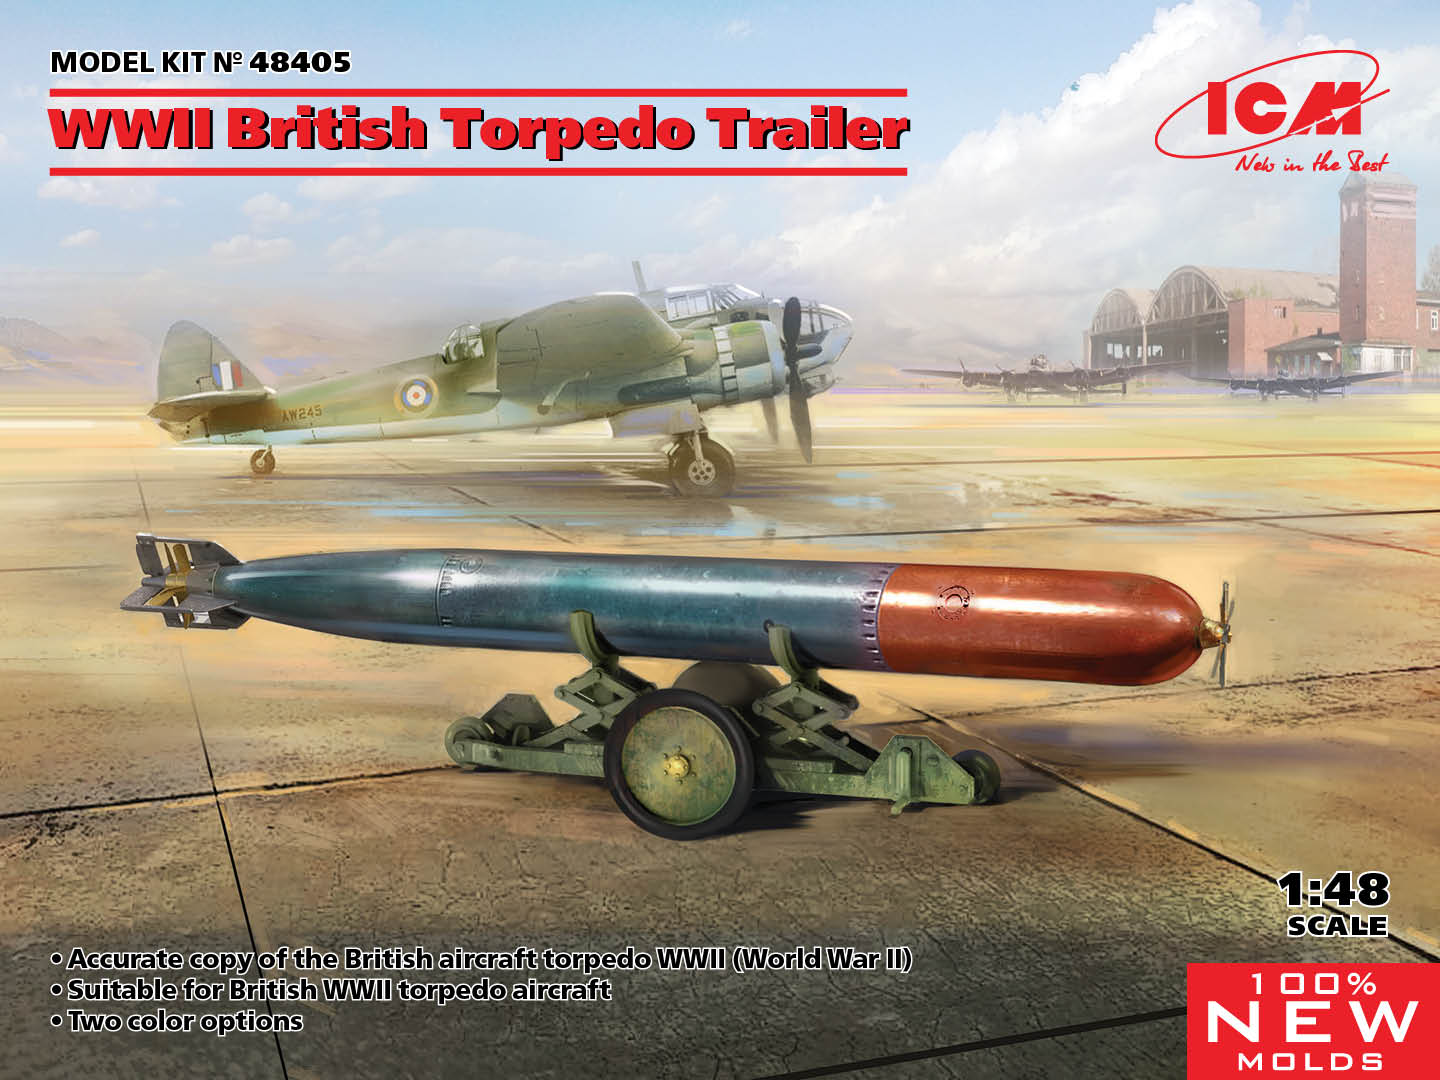 48405  дополнения из пластика  WWII British Torpedo Trailer  (1:48)